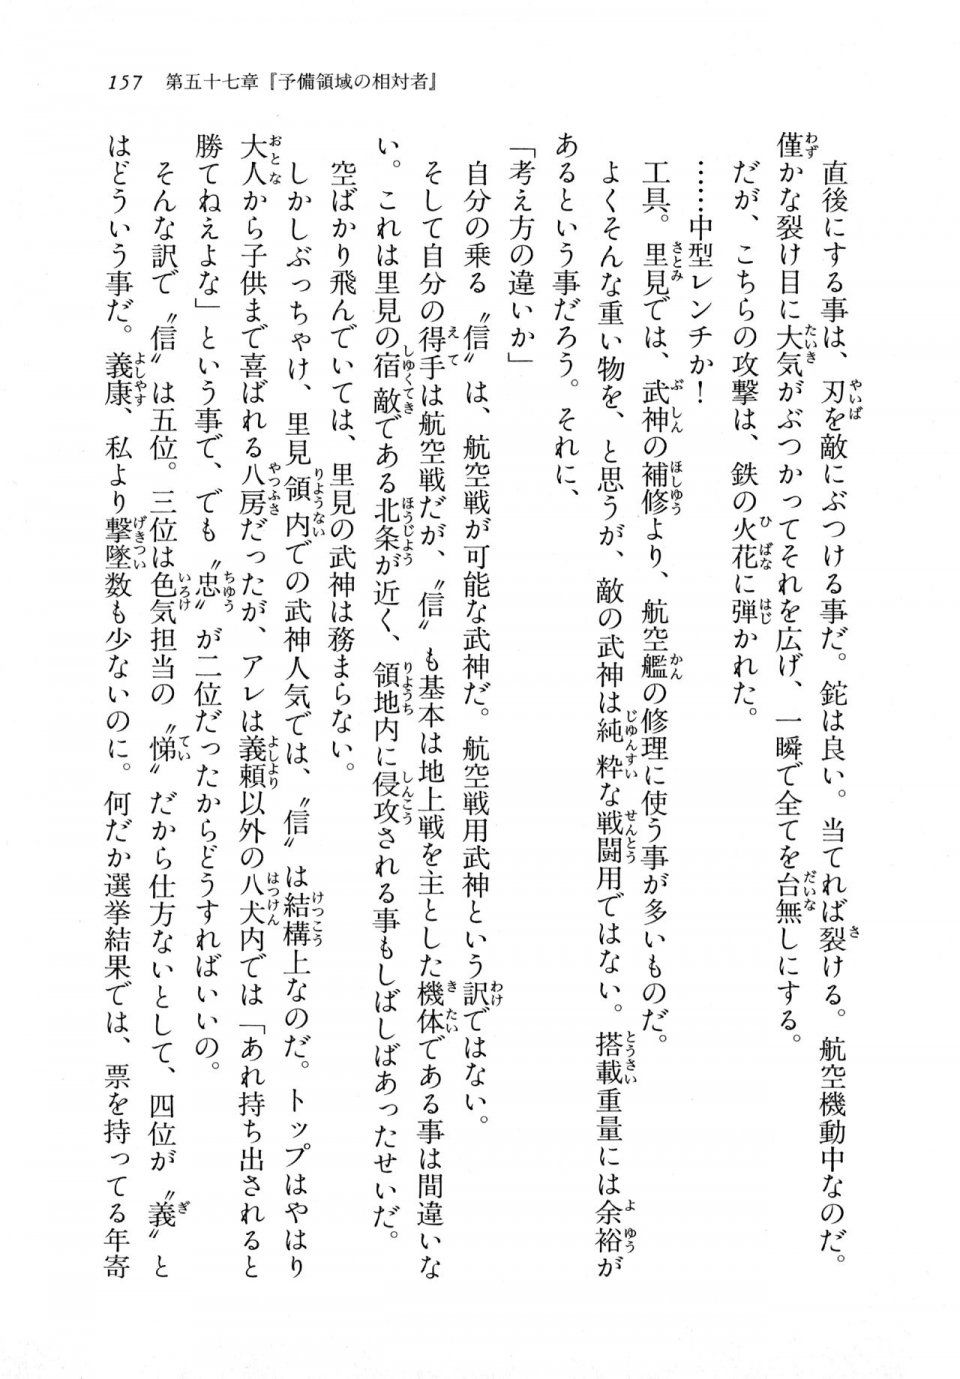 Kyoukai Senjou no Horizon LN Vol 18(7C) Part 1 - Photo #157